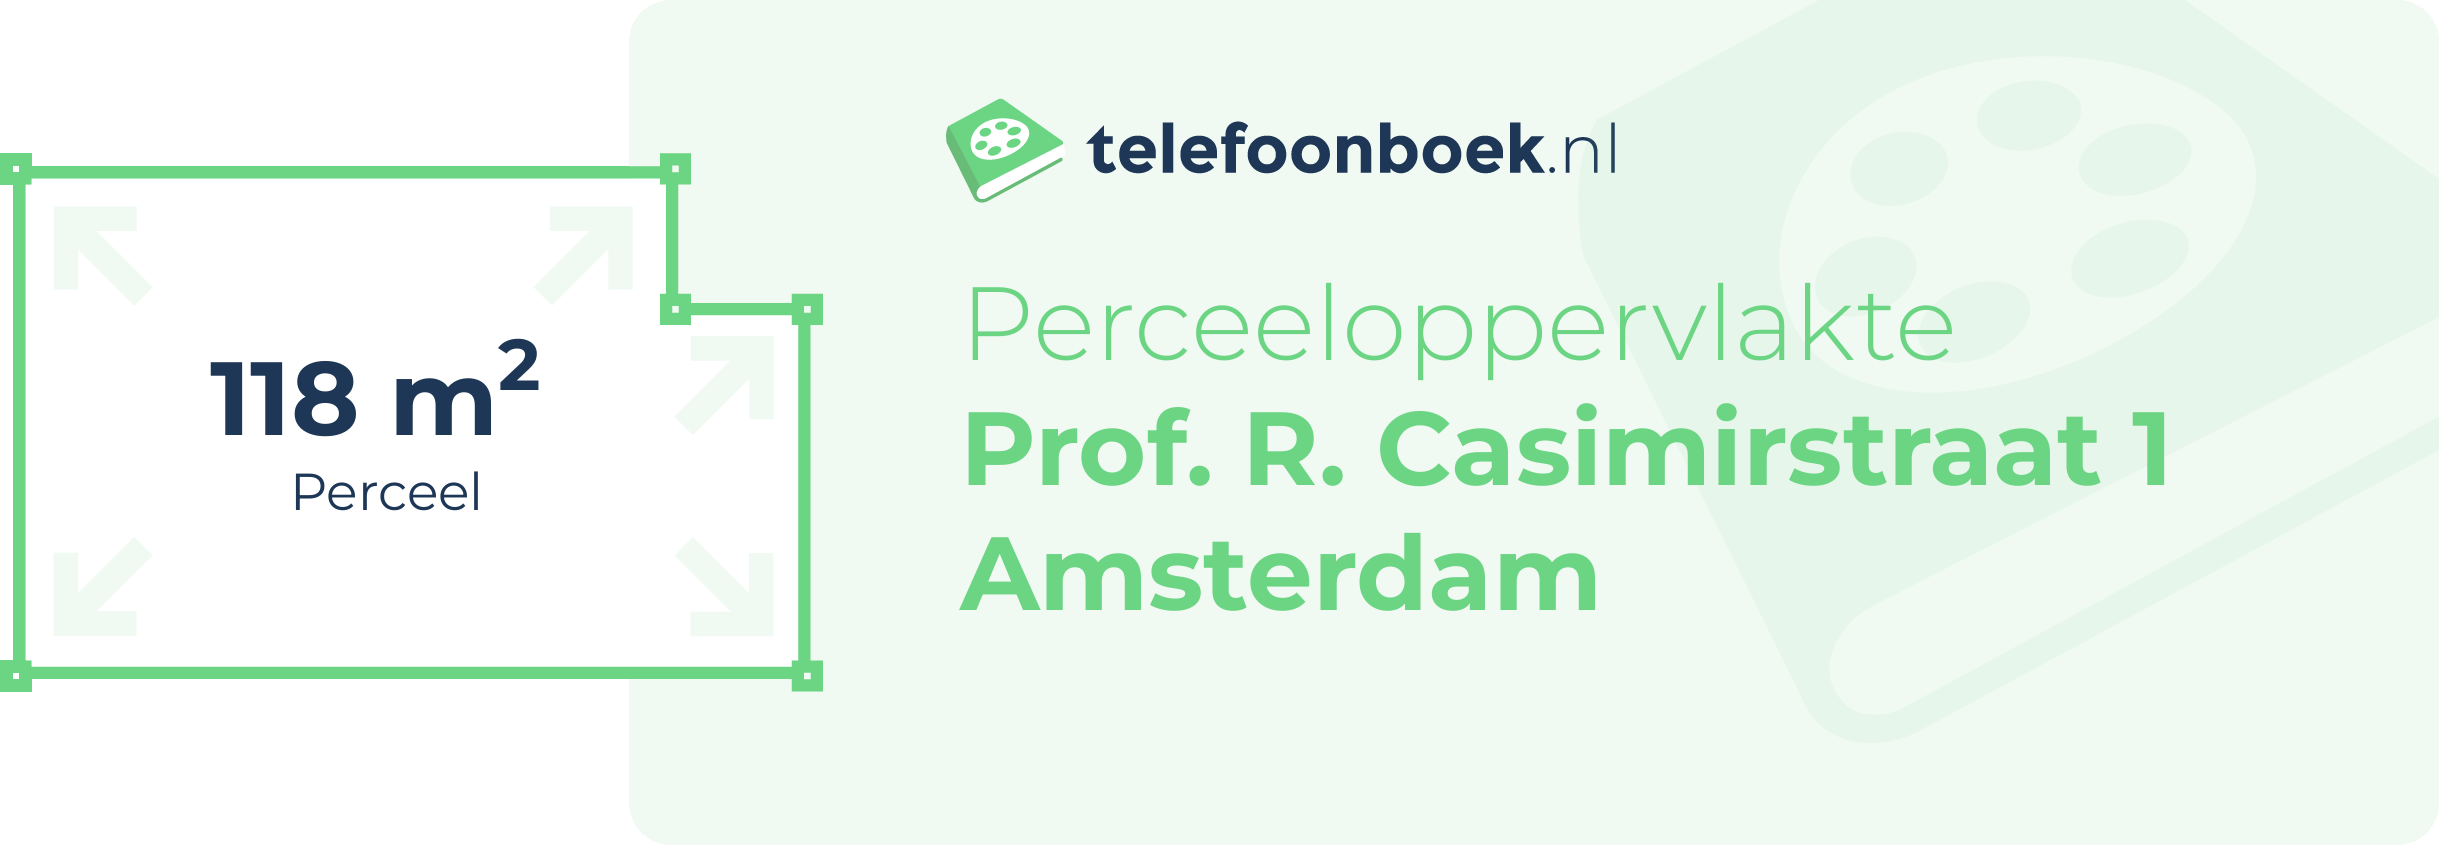 Perceeloppervlakte Prof. R. Casimirstraat 1 Amsterdam